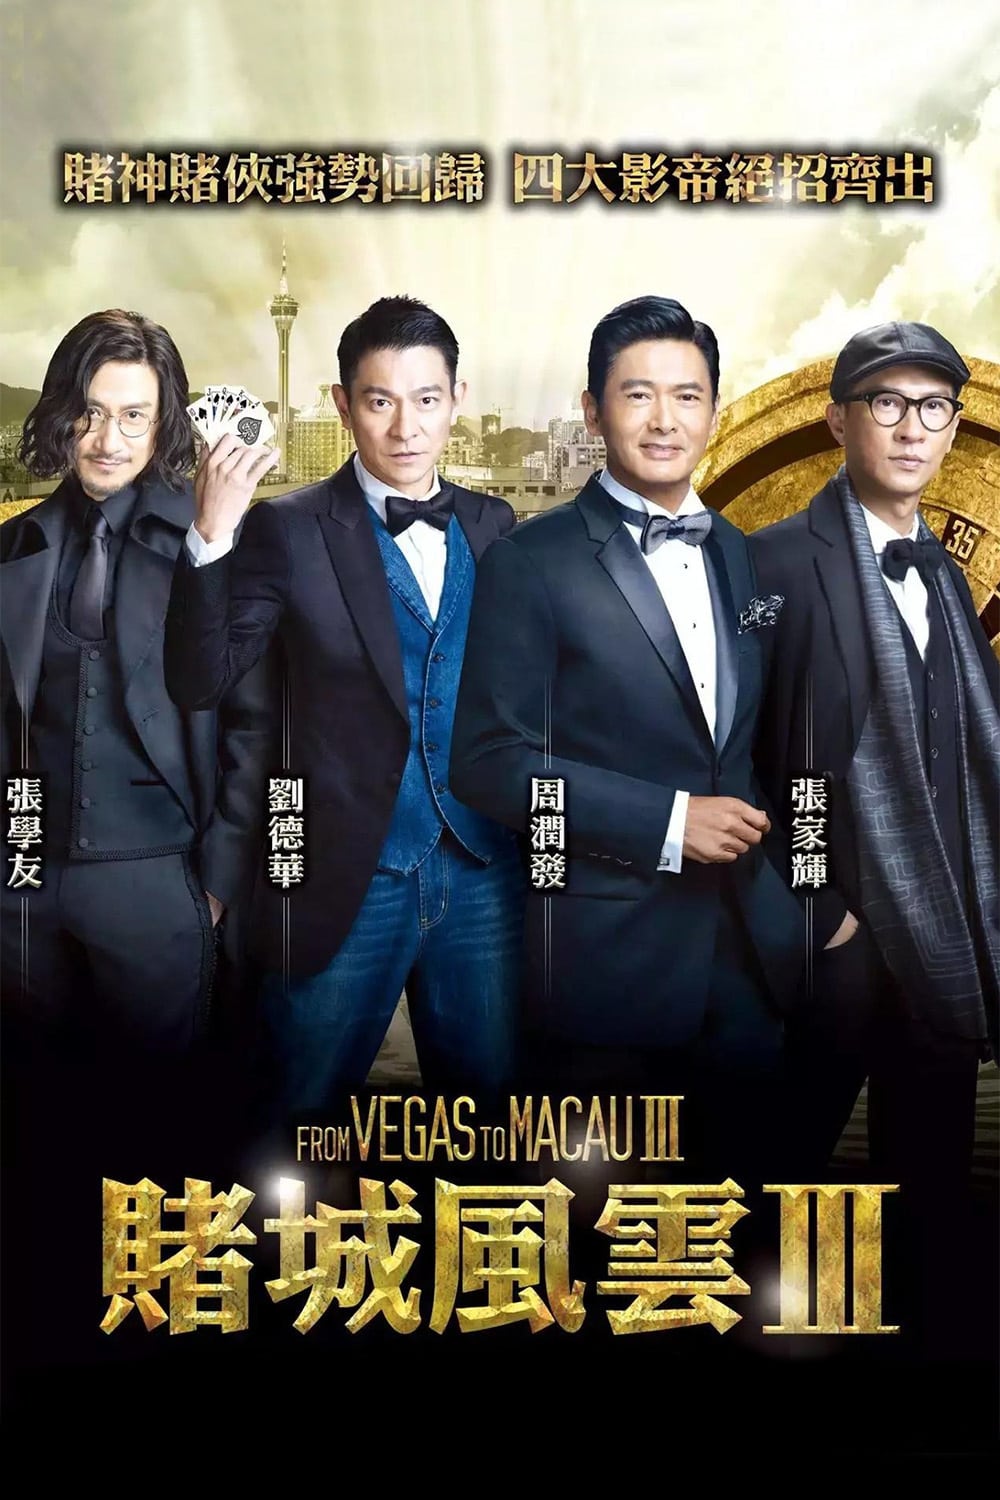 Plakat von "From Vegas To Macau III"